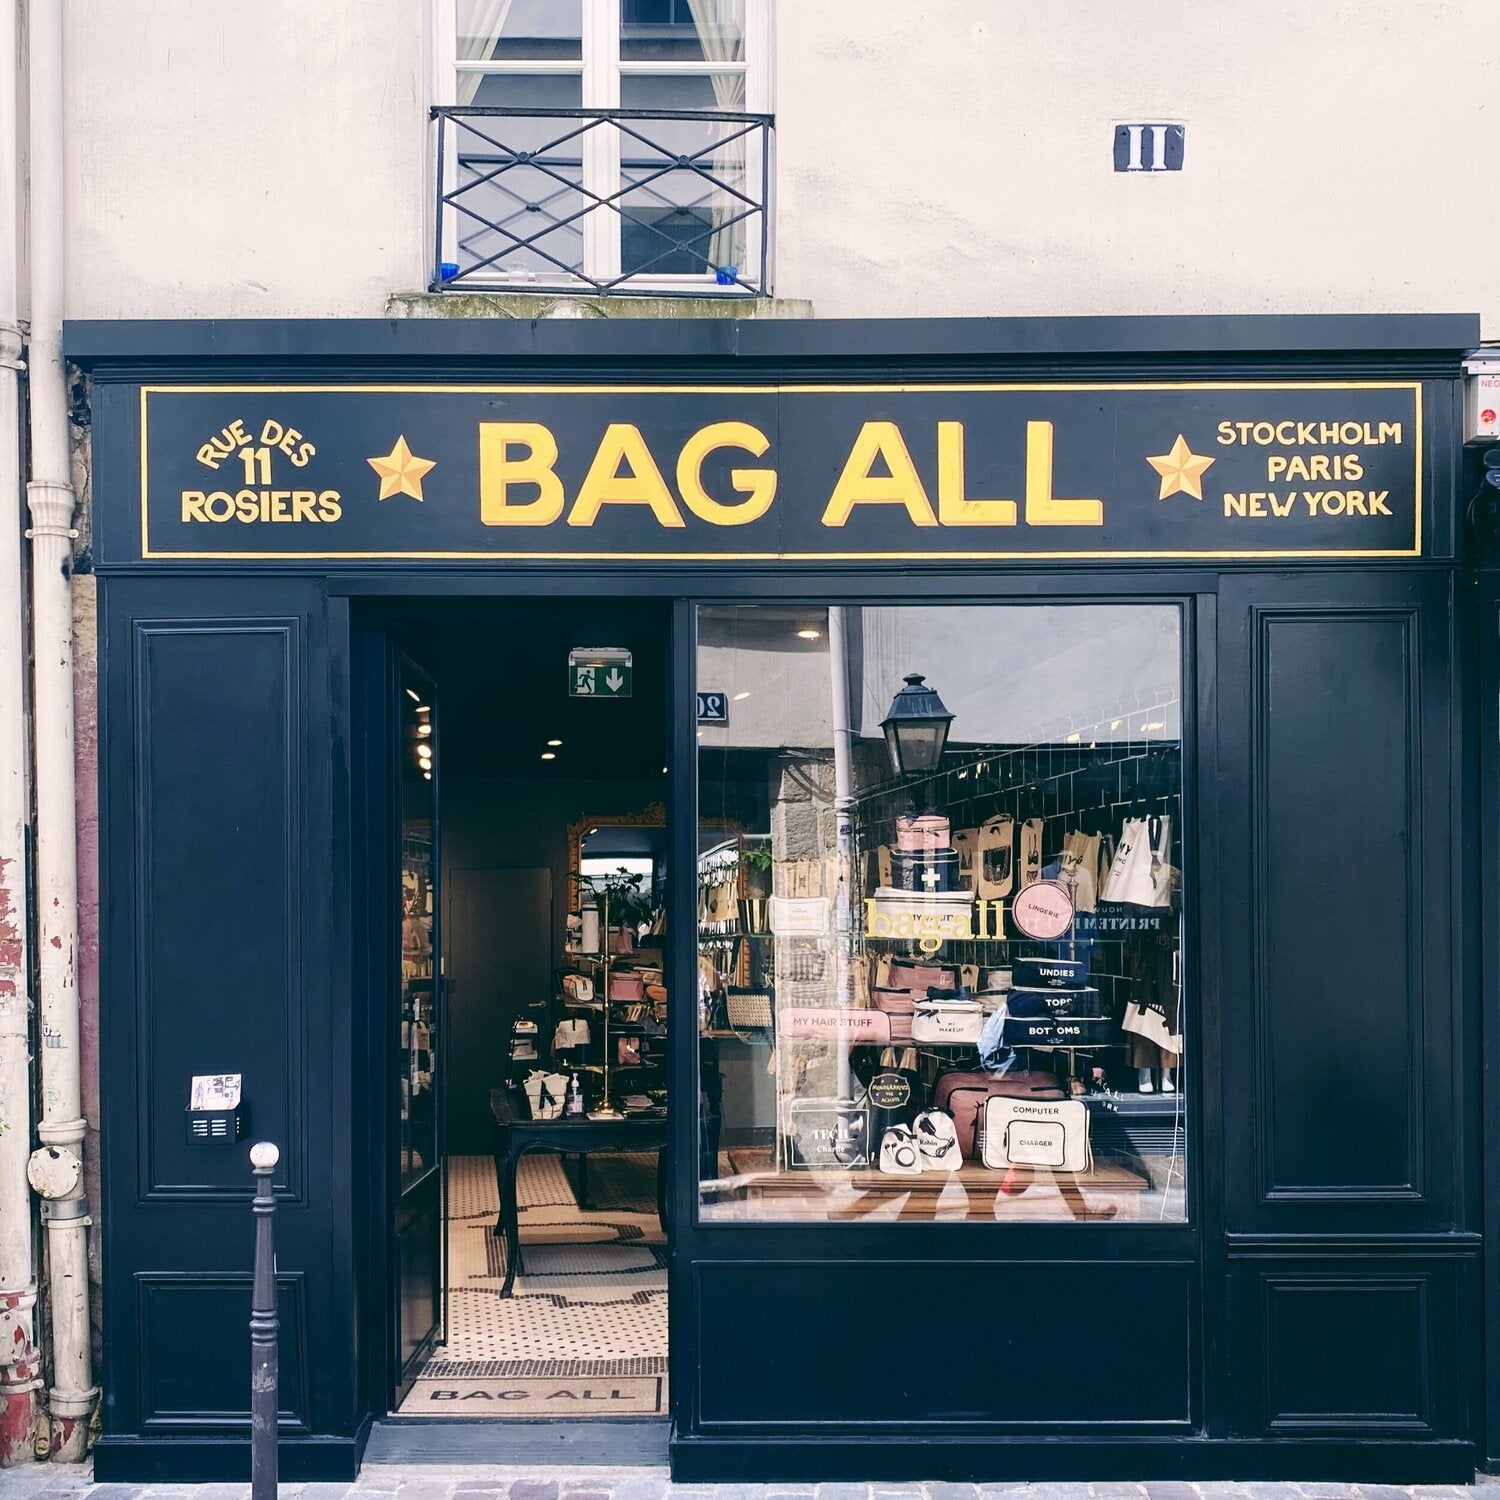 The Bag-all Paris Store